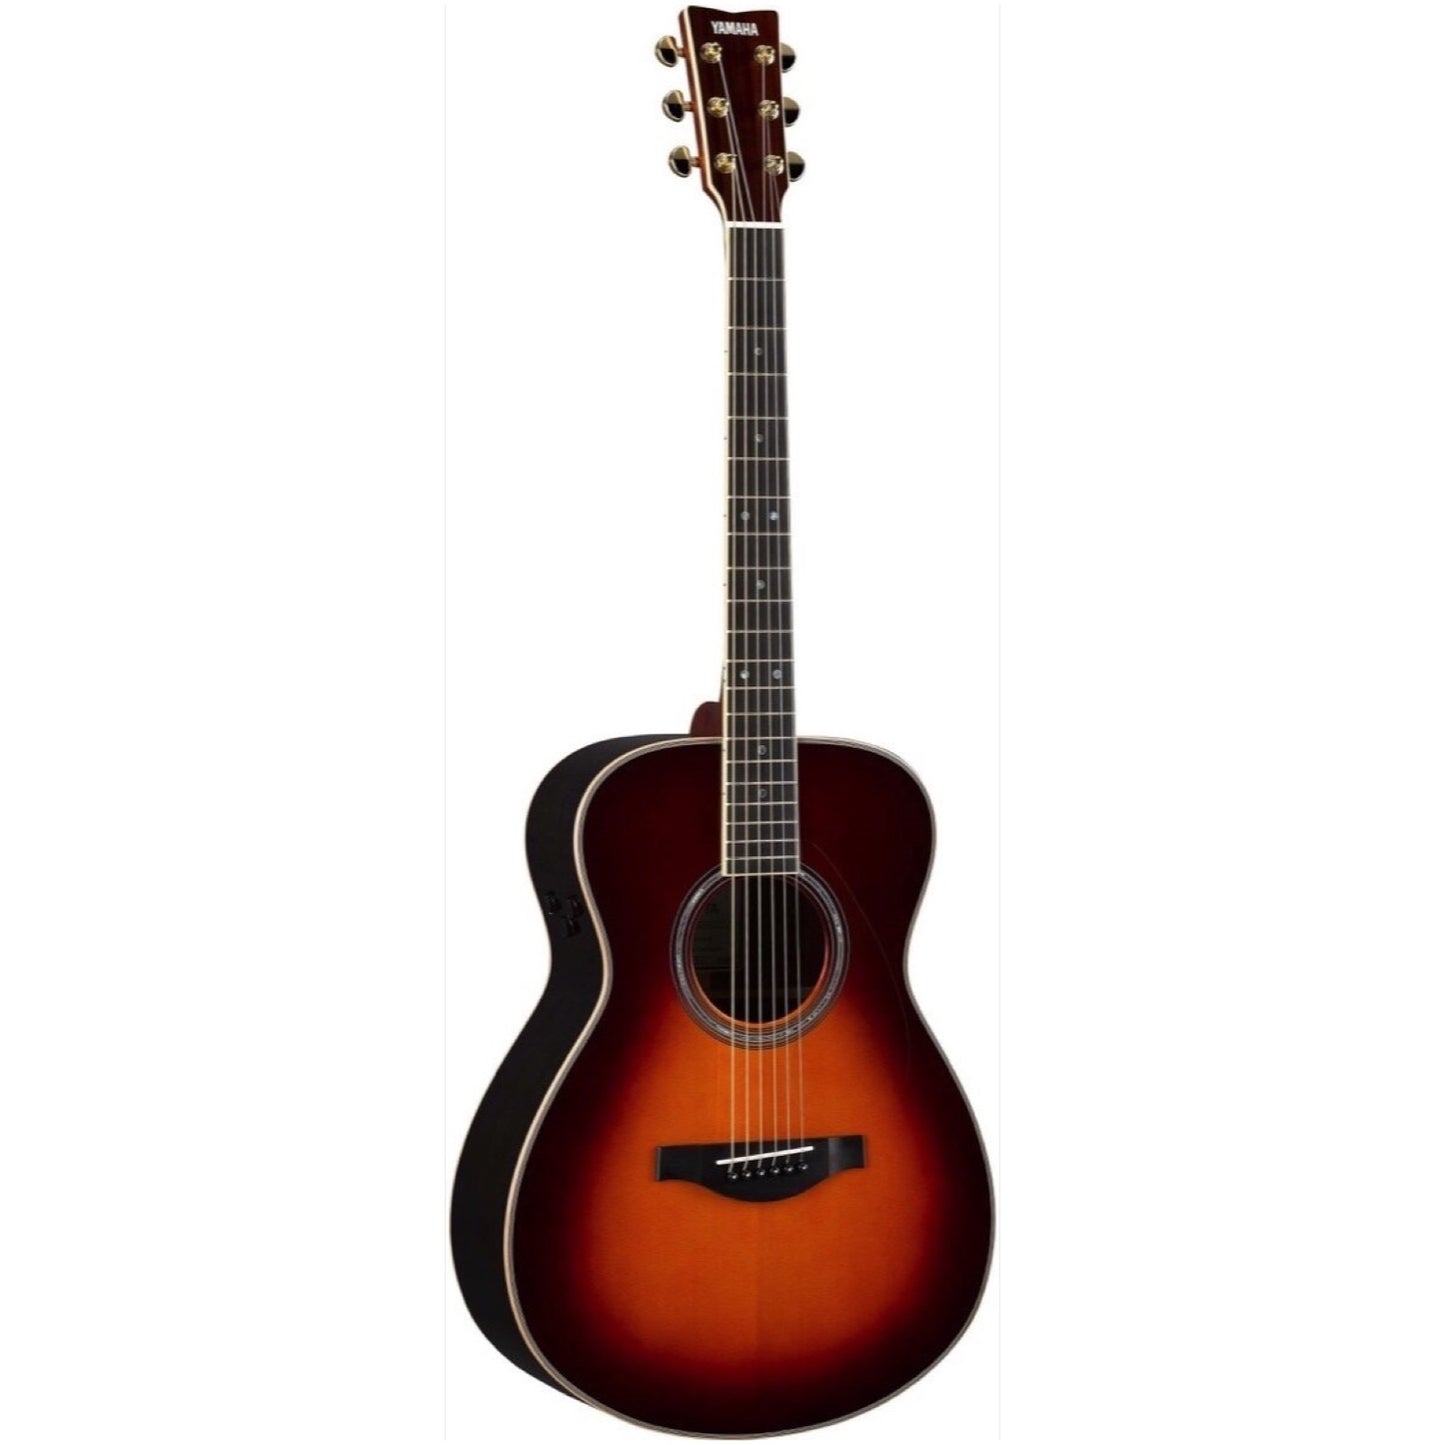 Yamaha LSTA TransAcoustic Acoustic-Electric Guitar (with Gig Bag), Brown Sunburst